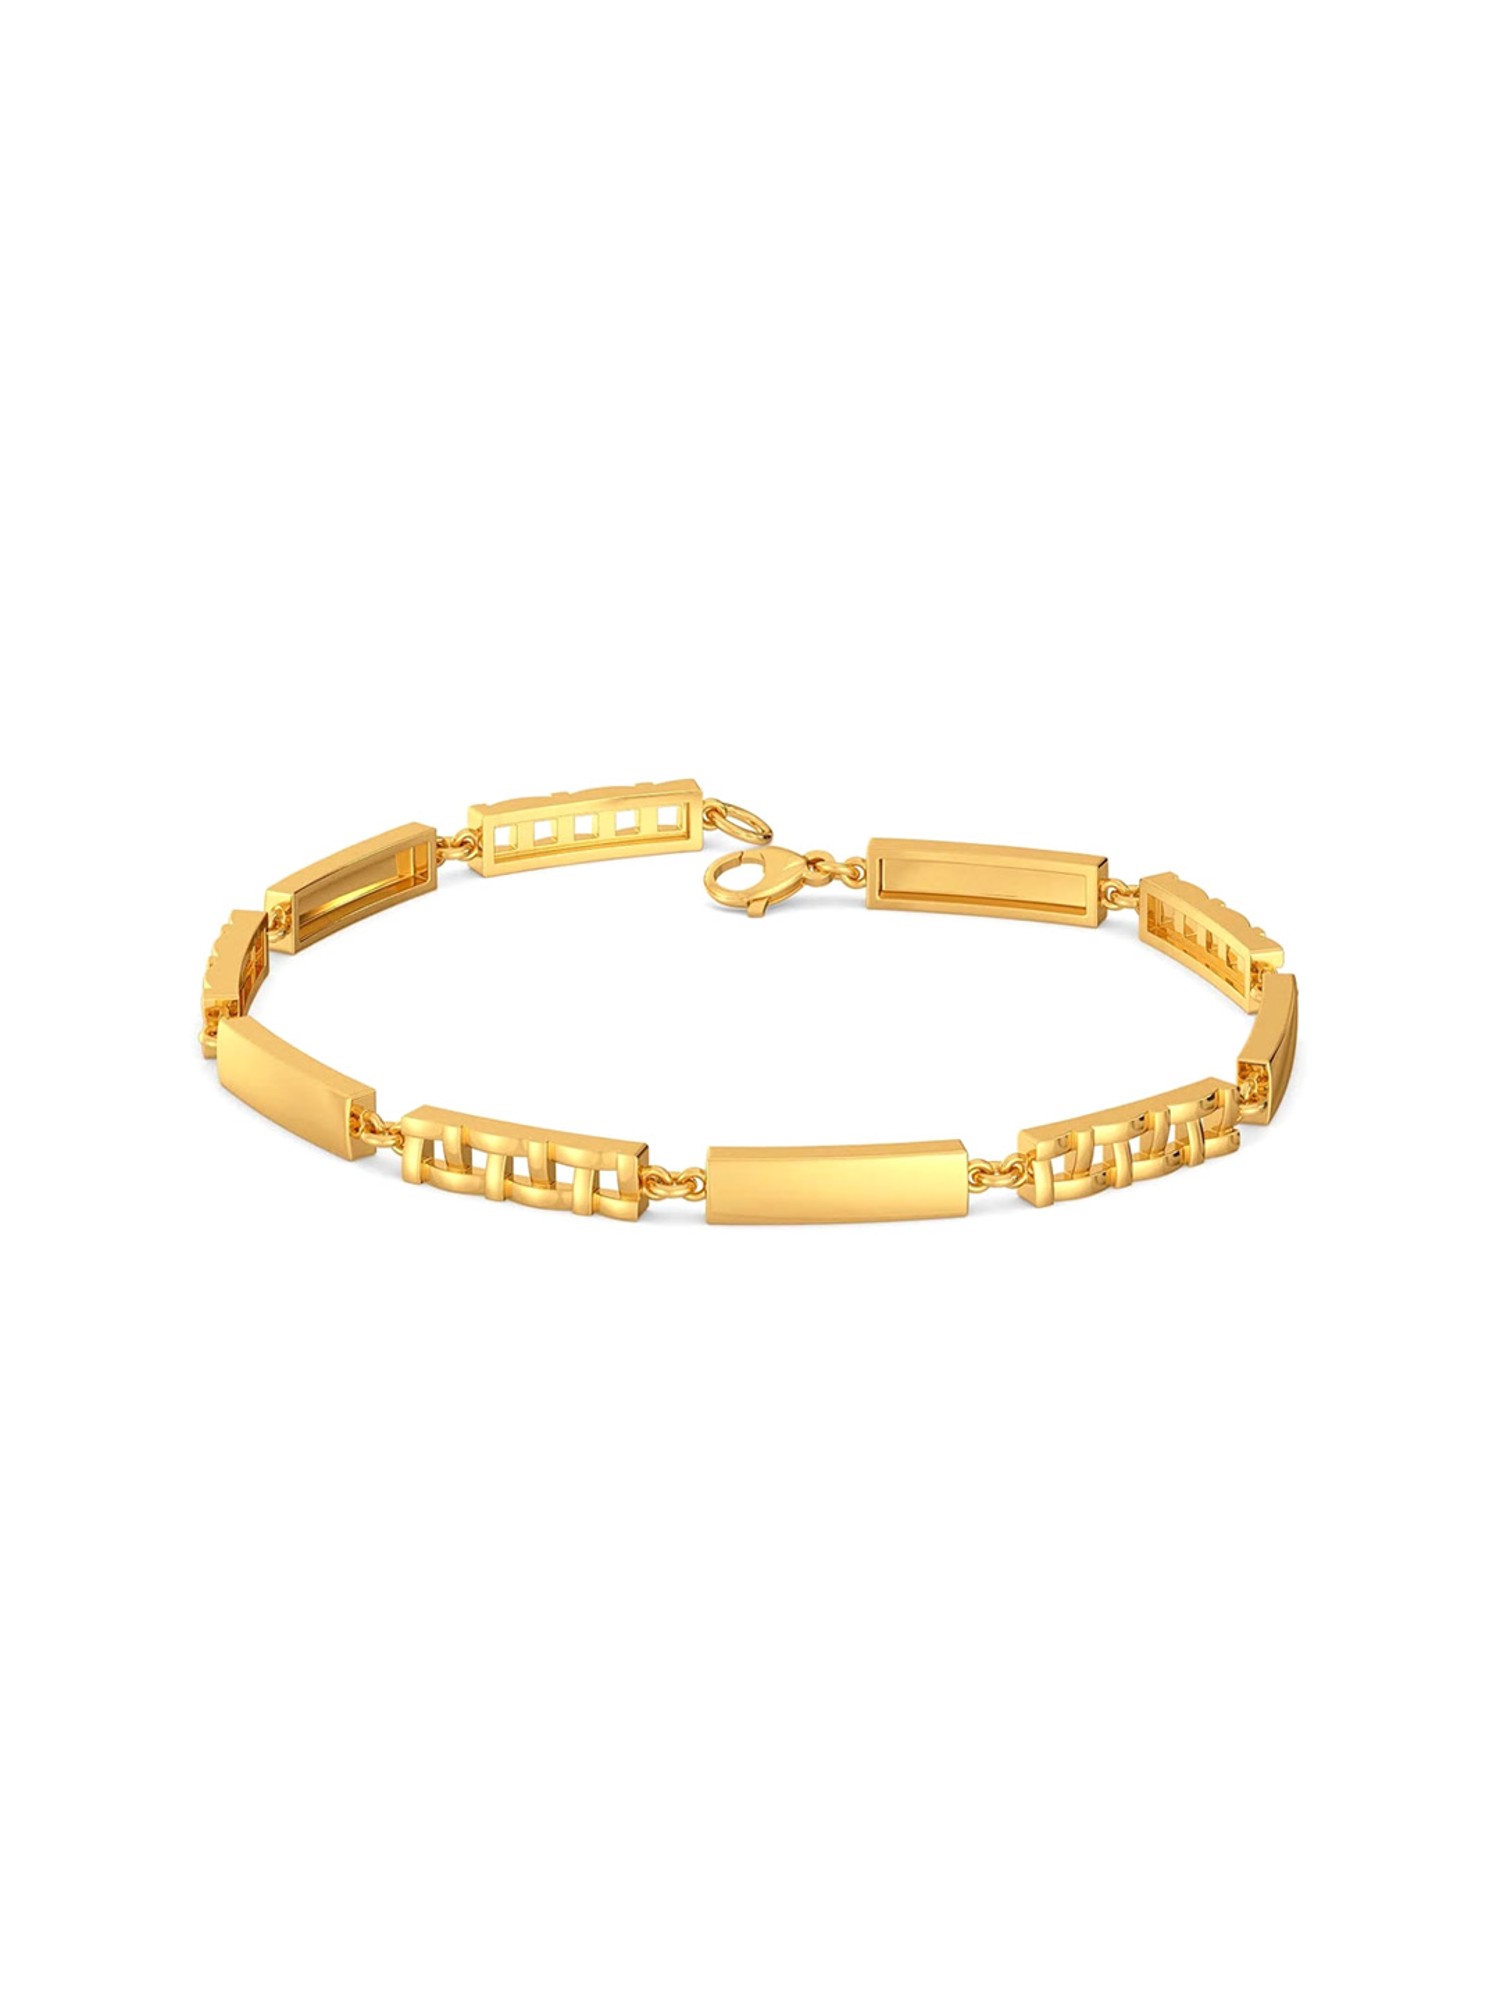 Personalized Mens id bracelet 18K Gold Plated Engraved Name Bracelet gift  for men Monogram   Nameplate bracelet Personalized gold bracelet Mens  gold bracelets